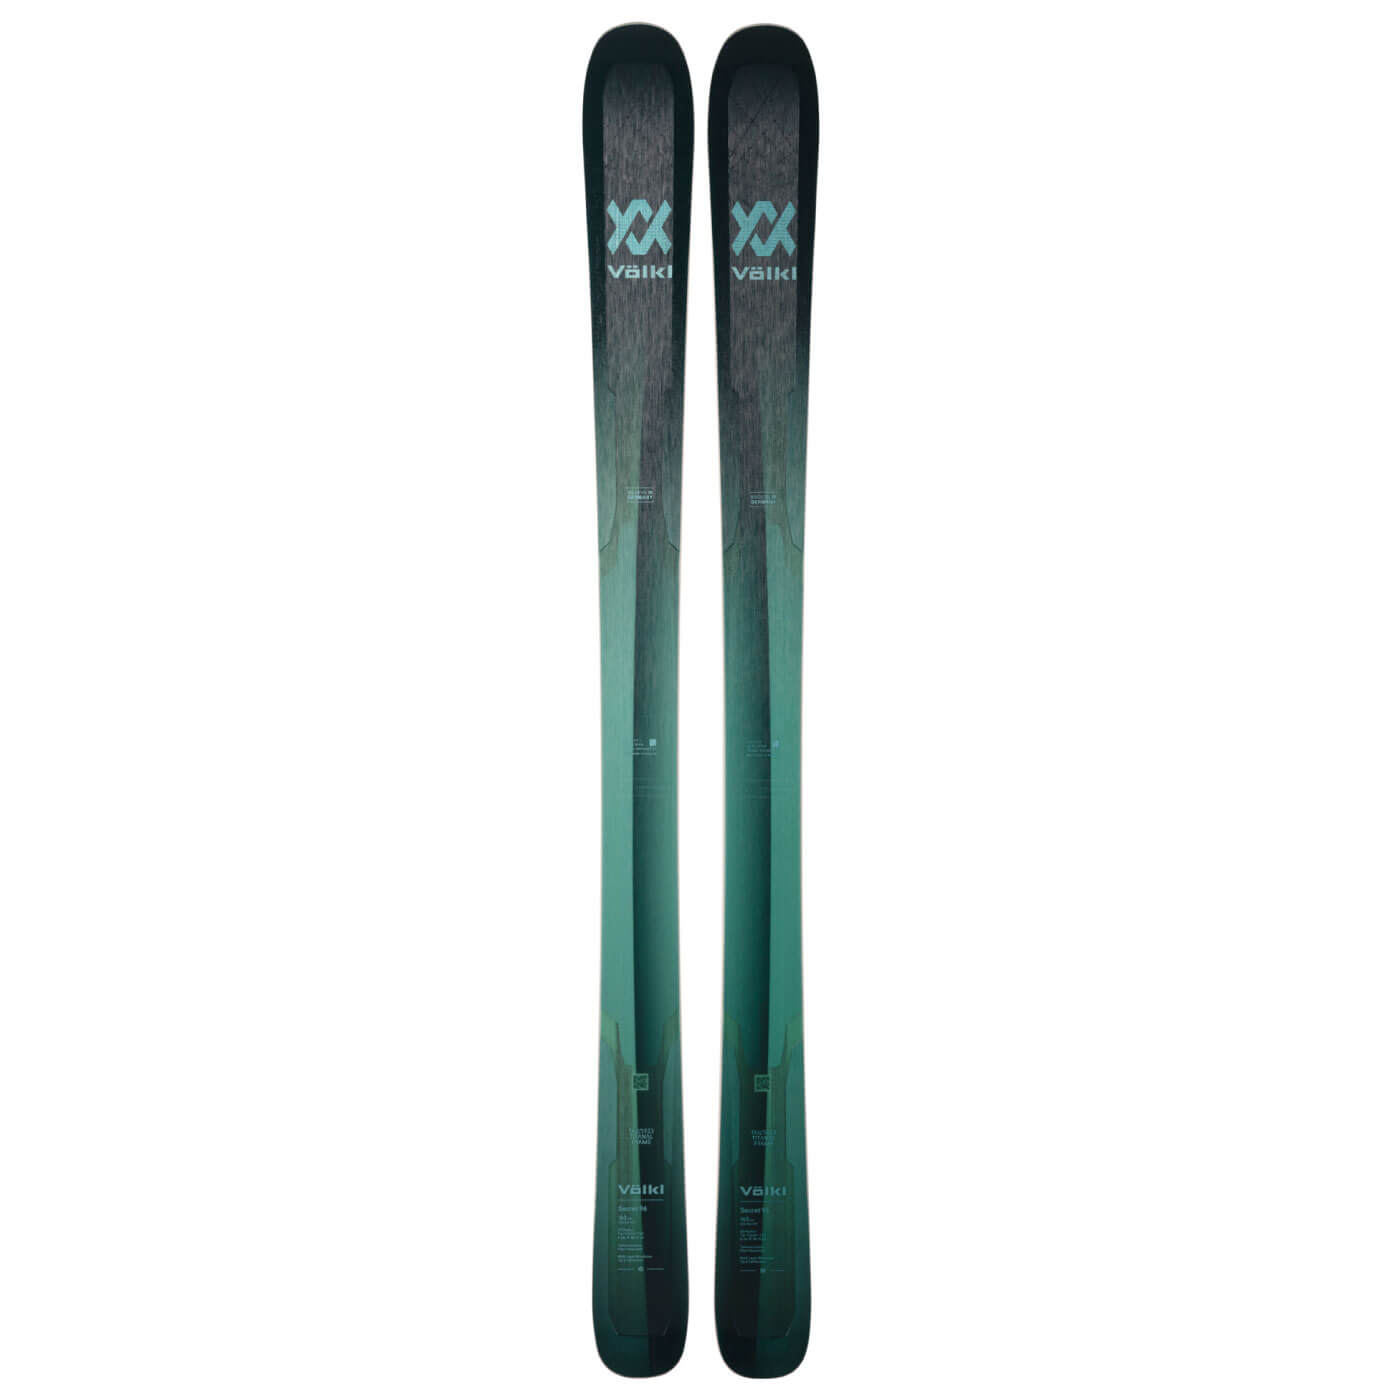 Volkl Women's Secret 96 Alpine Ski 2022 149